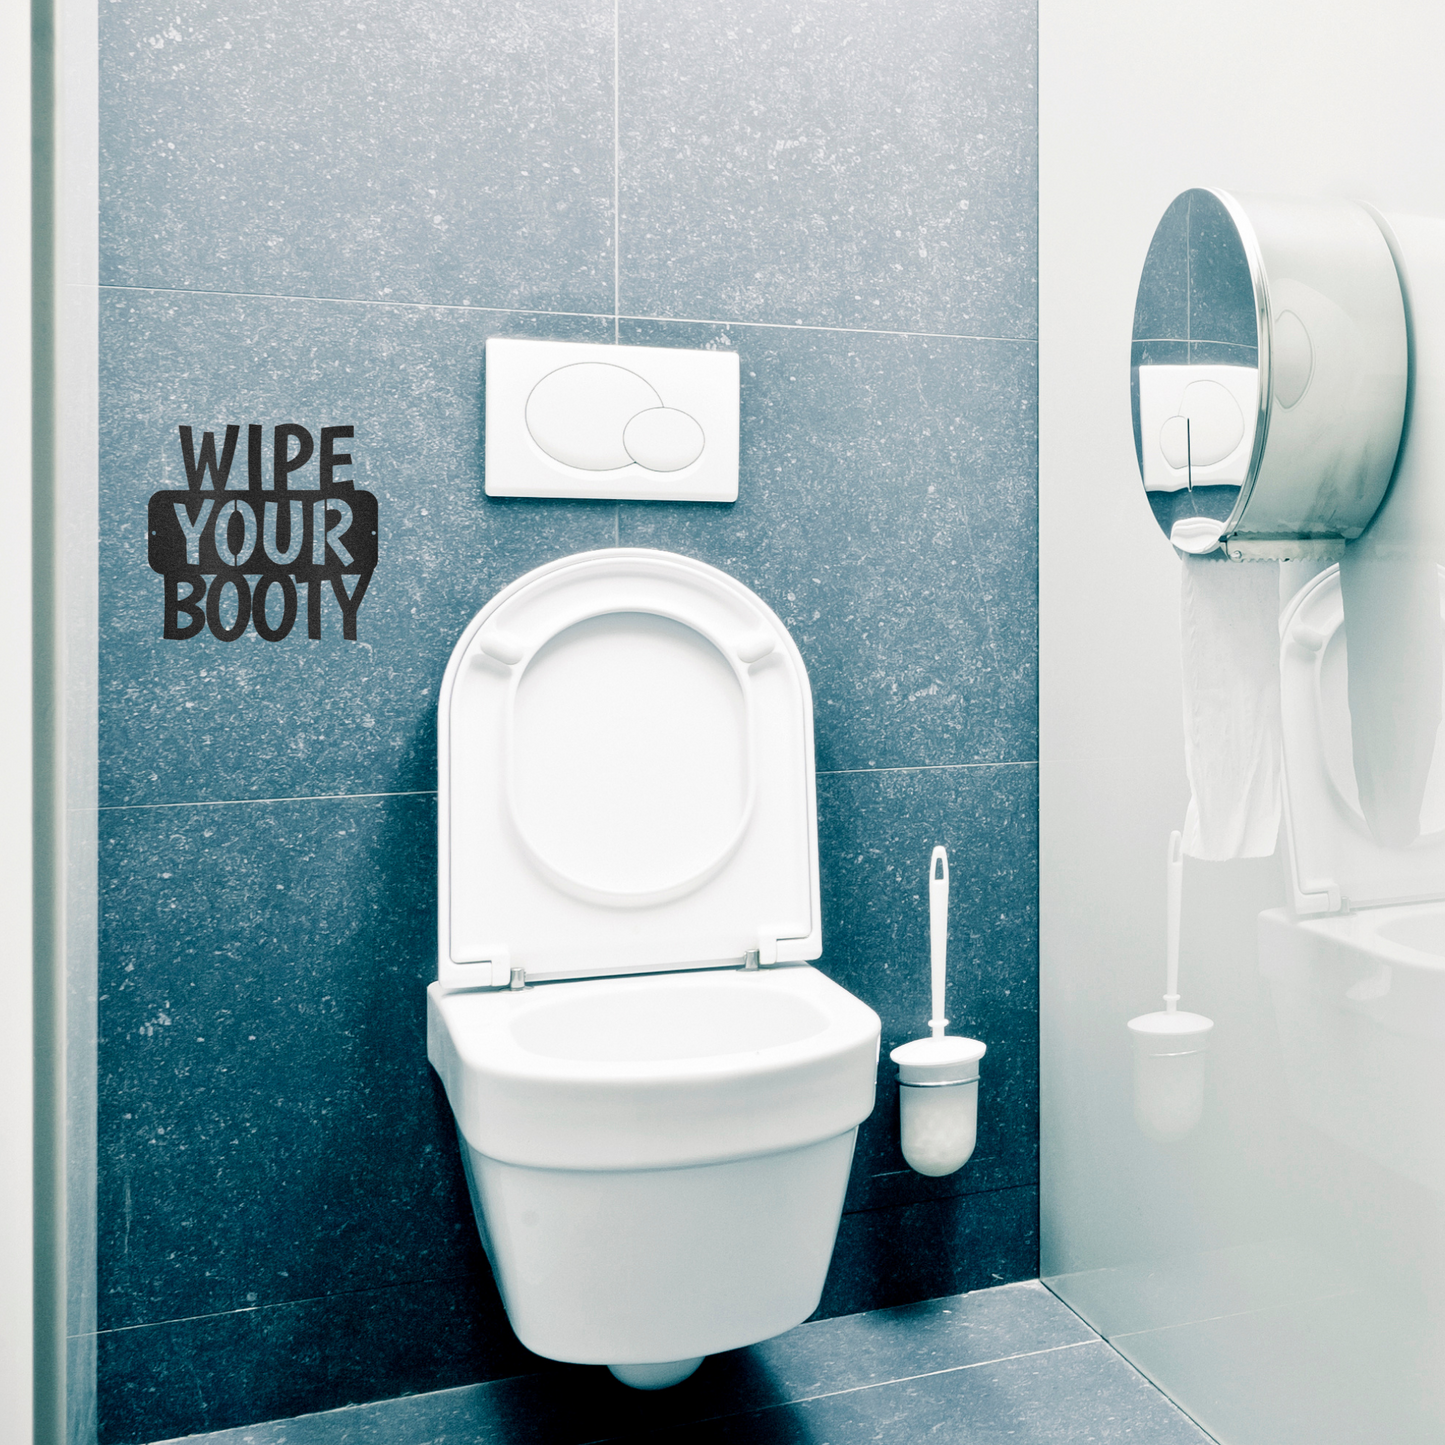 Wipe Your Booty Quote, Bathroom Sign, Modern Bathroom, Farmhouse Decor, Custom Metal Sign, Indoor Outdoor Steel Wall Sign